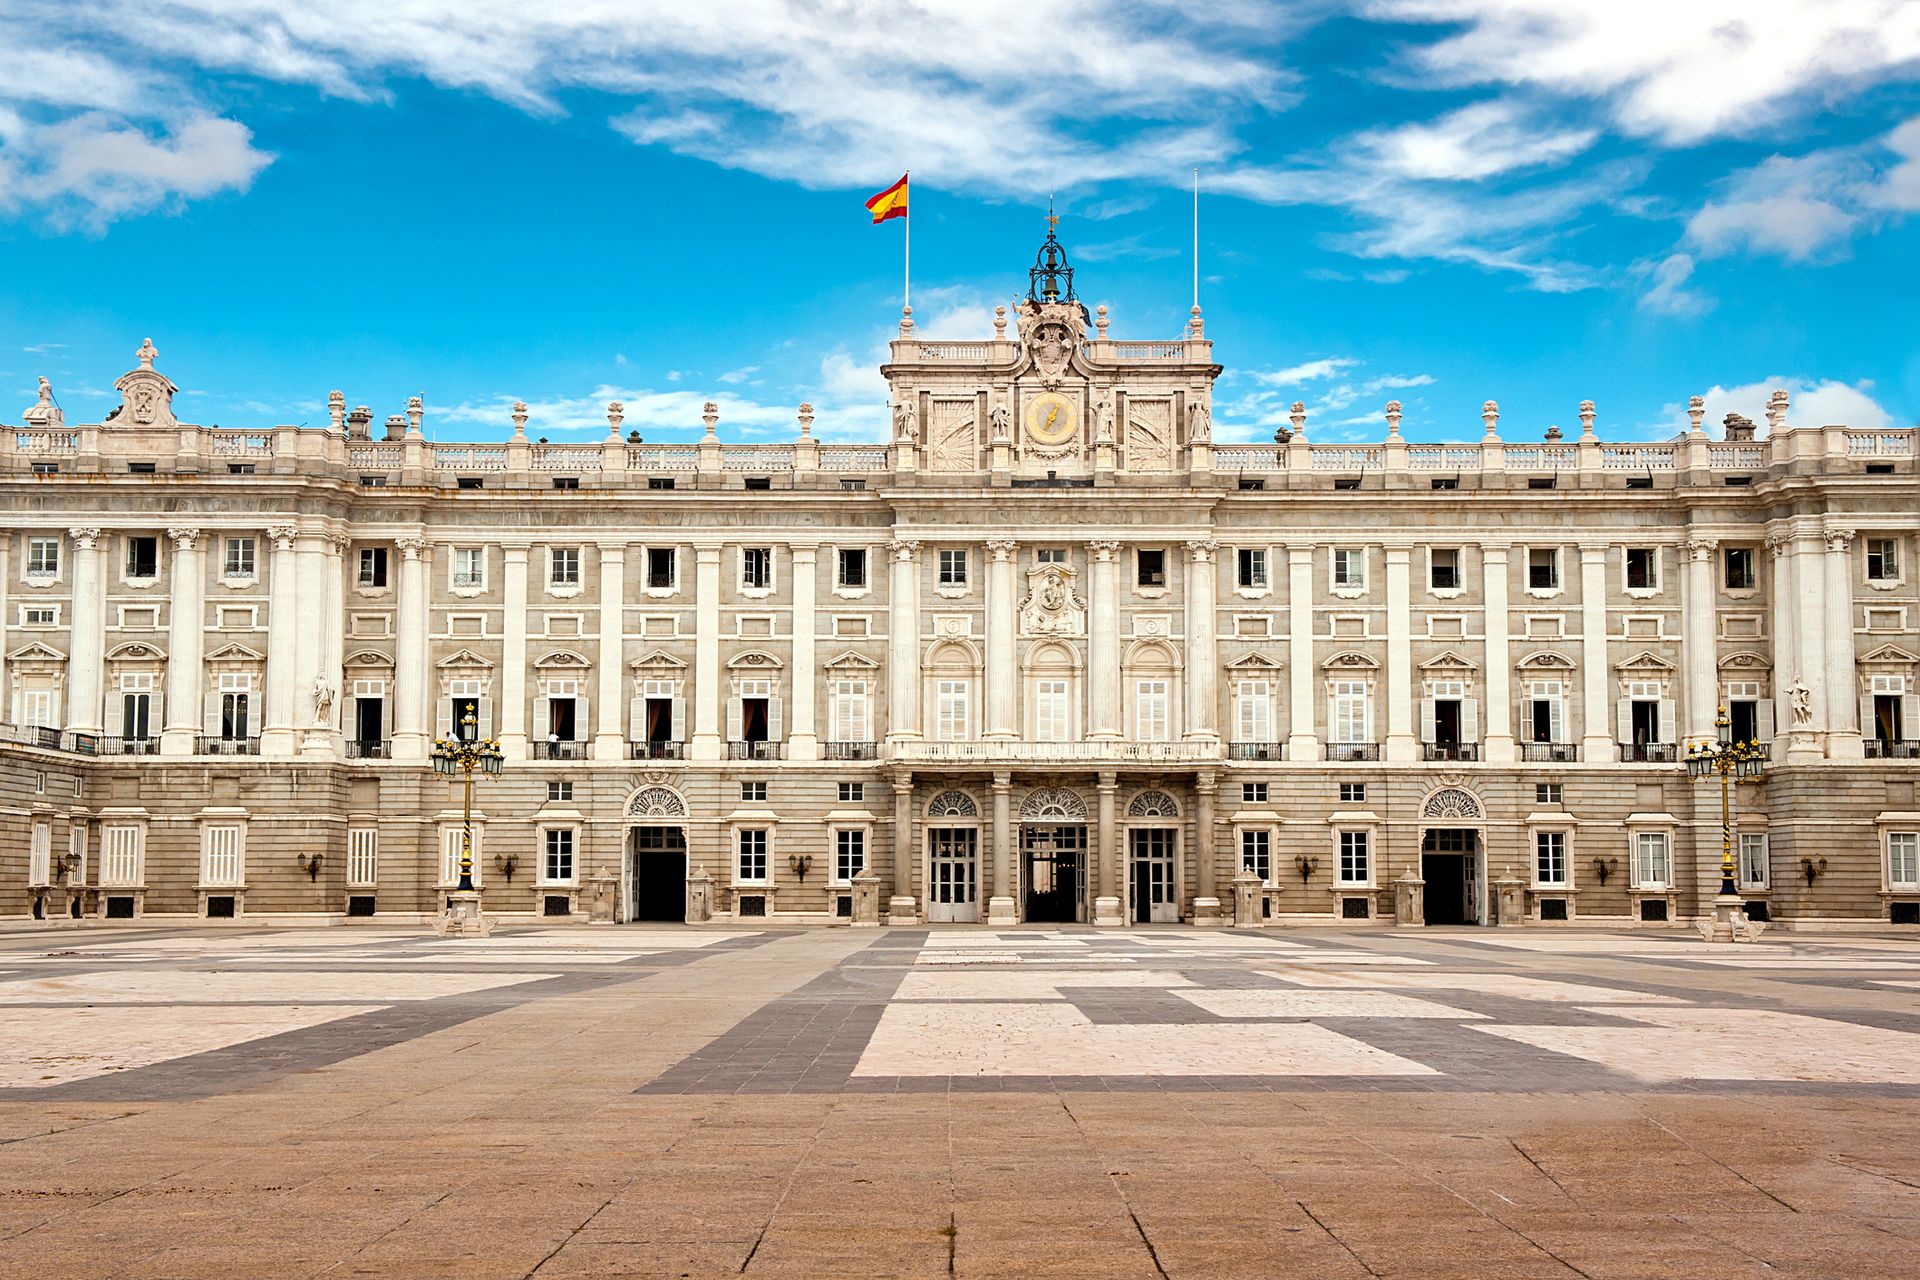  Le palais royal, Madrid - Espagne ©iStock